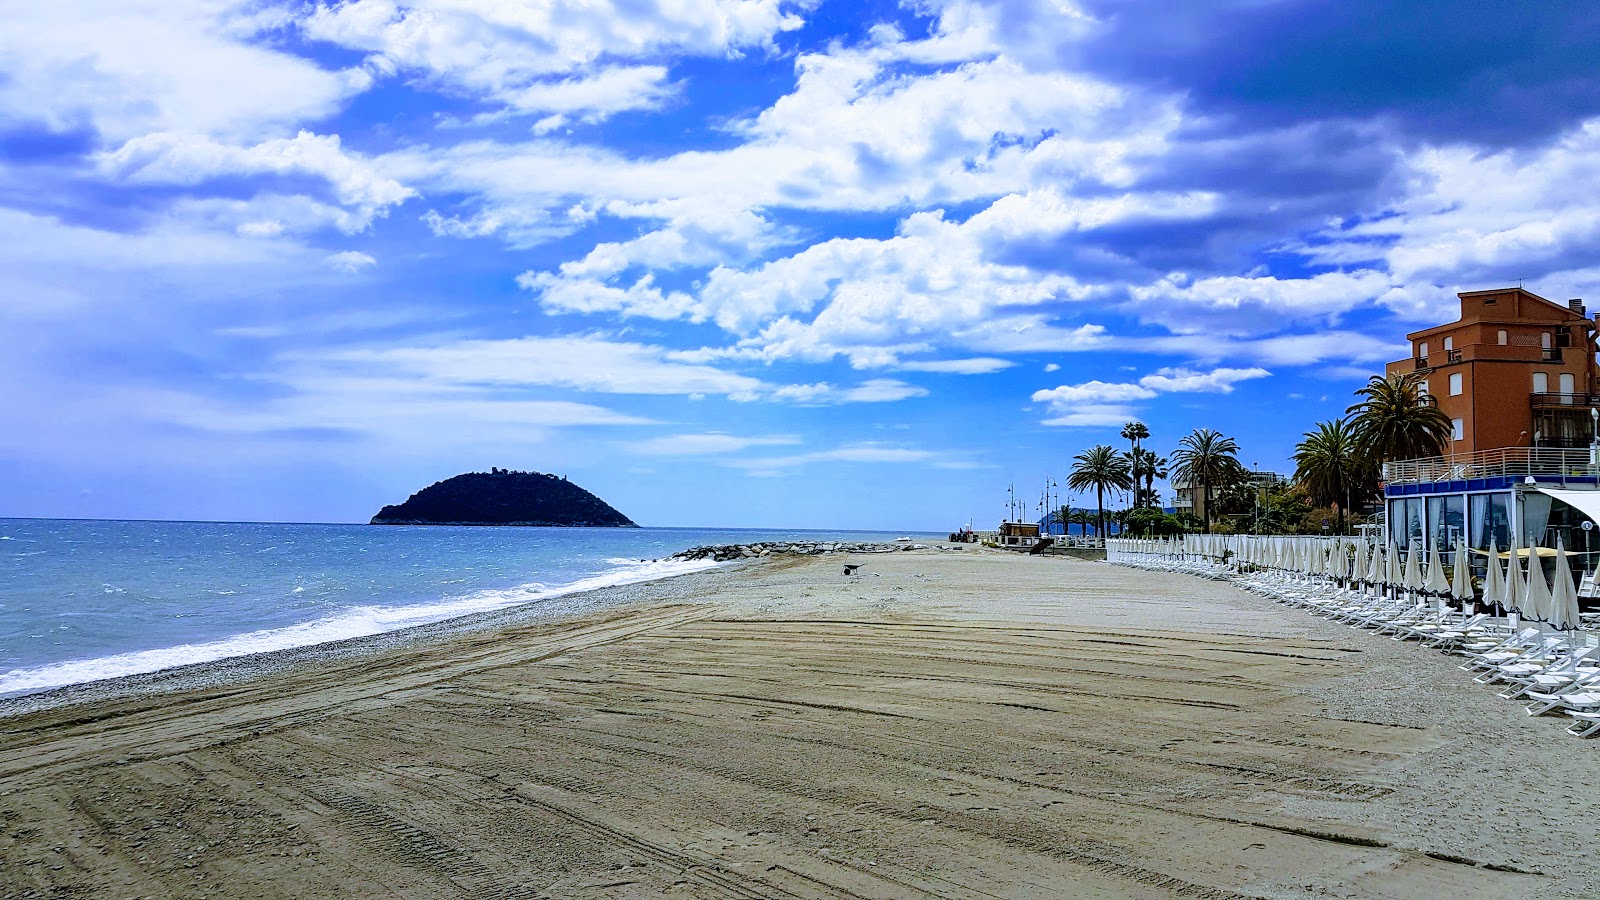 Fotografija Doria beach z prostorna obala